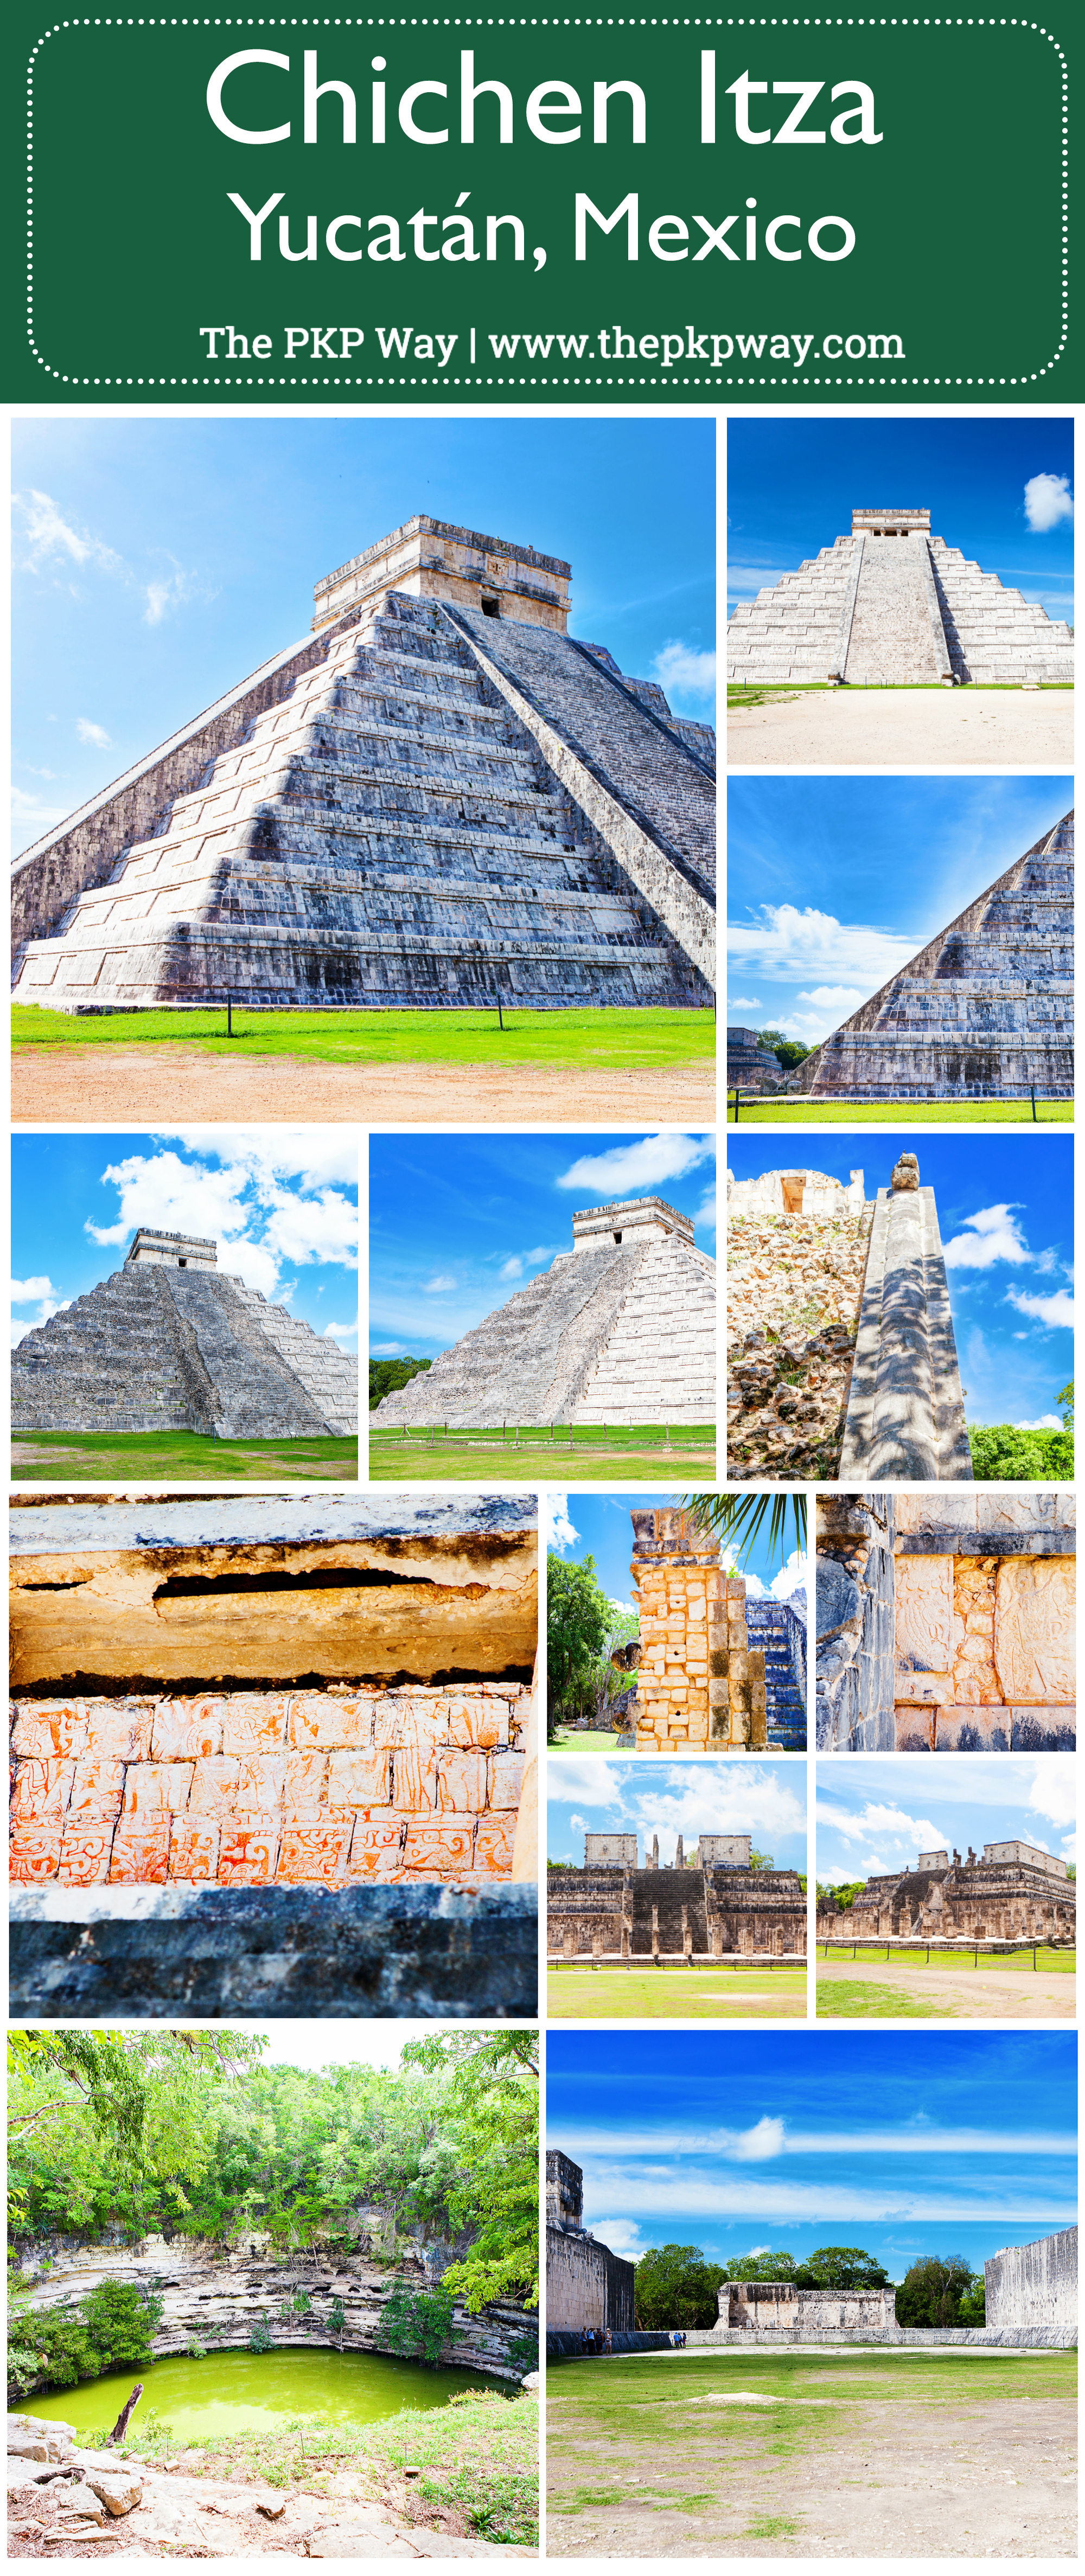 A glimpse into Chichén Itzá (Chichen Itza), an ancient Mayan town in Yucatán, Mexico.